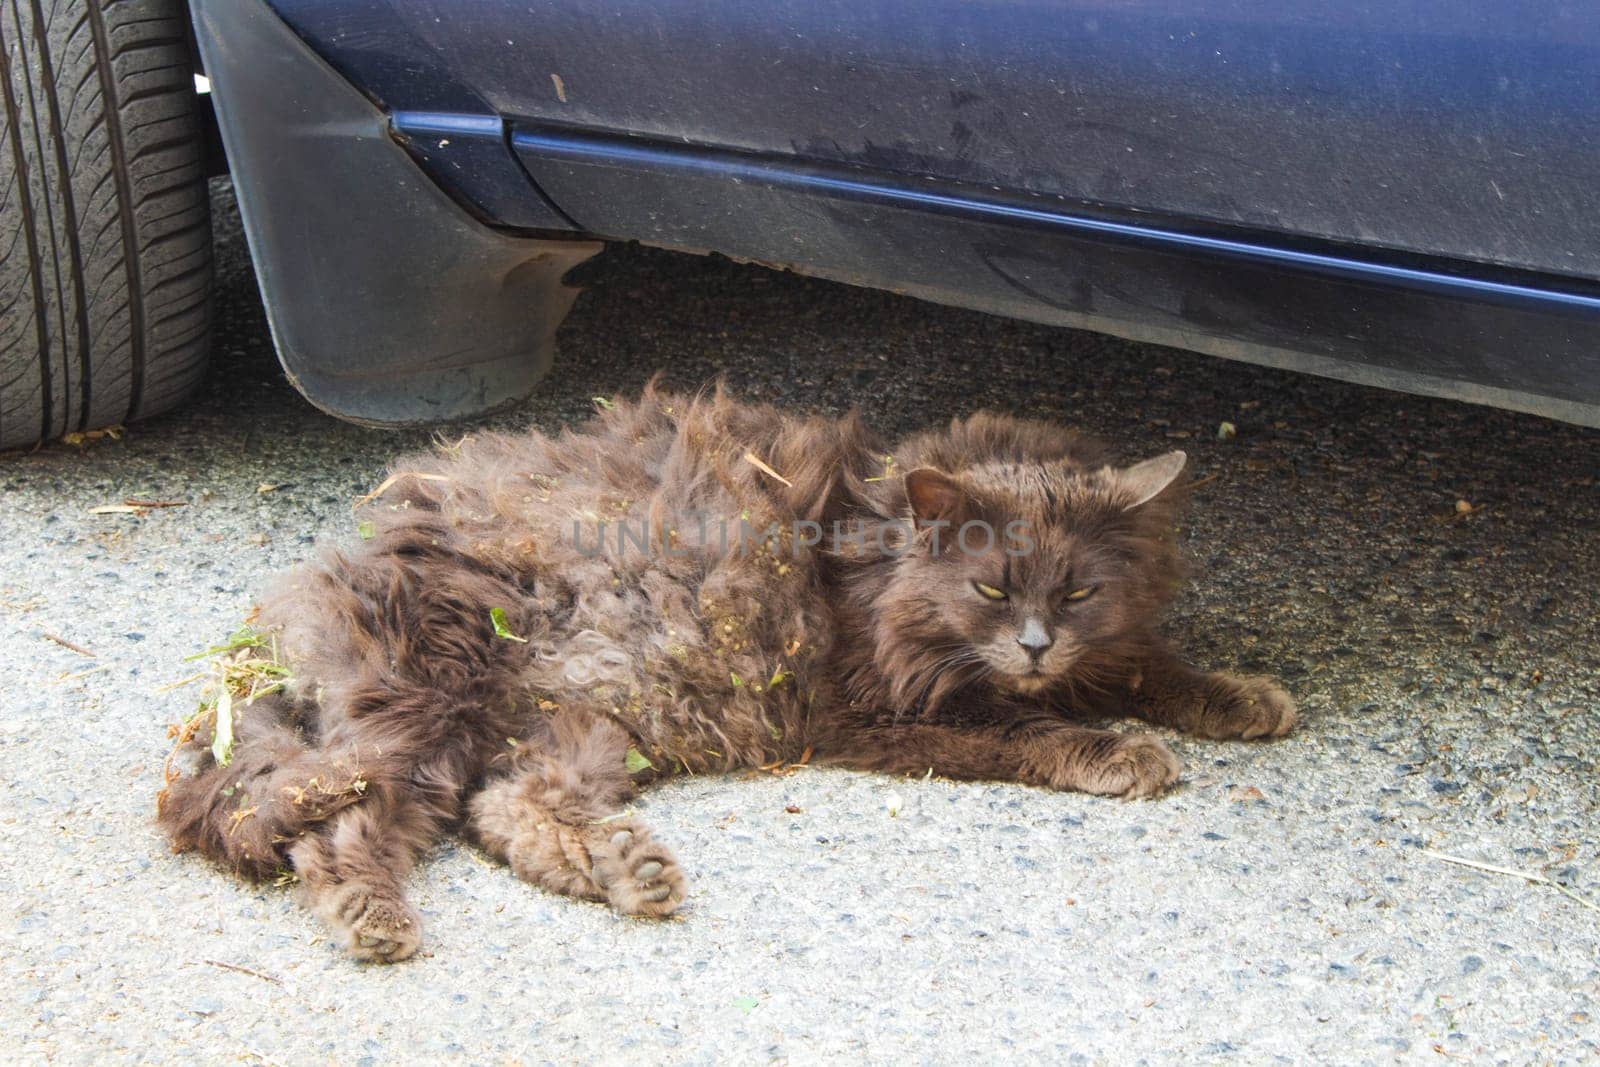 nder-Car Explorer Dusty Cat Amidst Plant Treasures. Under-Car, Explorer, Dusty Cat, Plant Treasures, Adventure, Feline, Urban, Natural, World, Dust, Covered, Dusty Fur by DakotaBOldeman